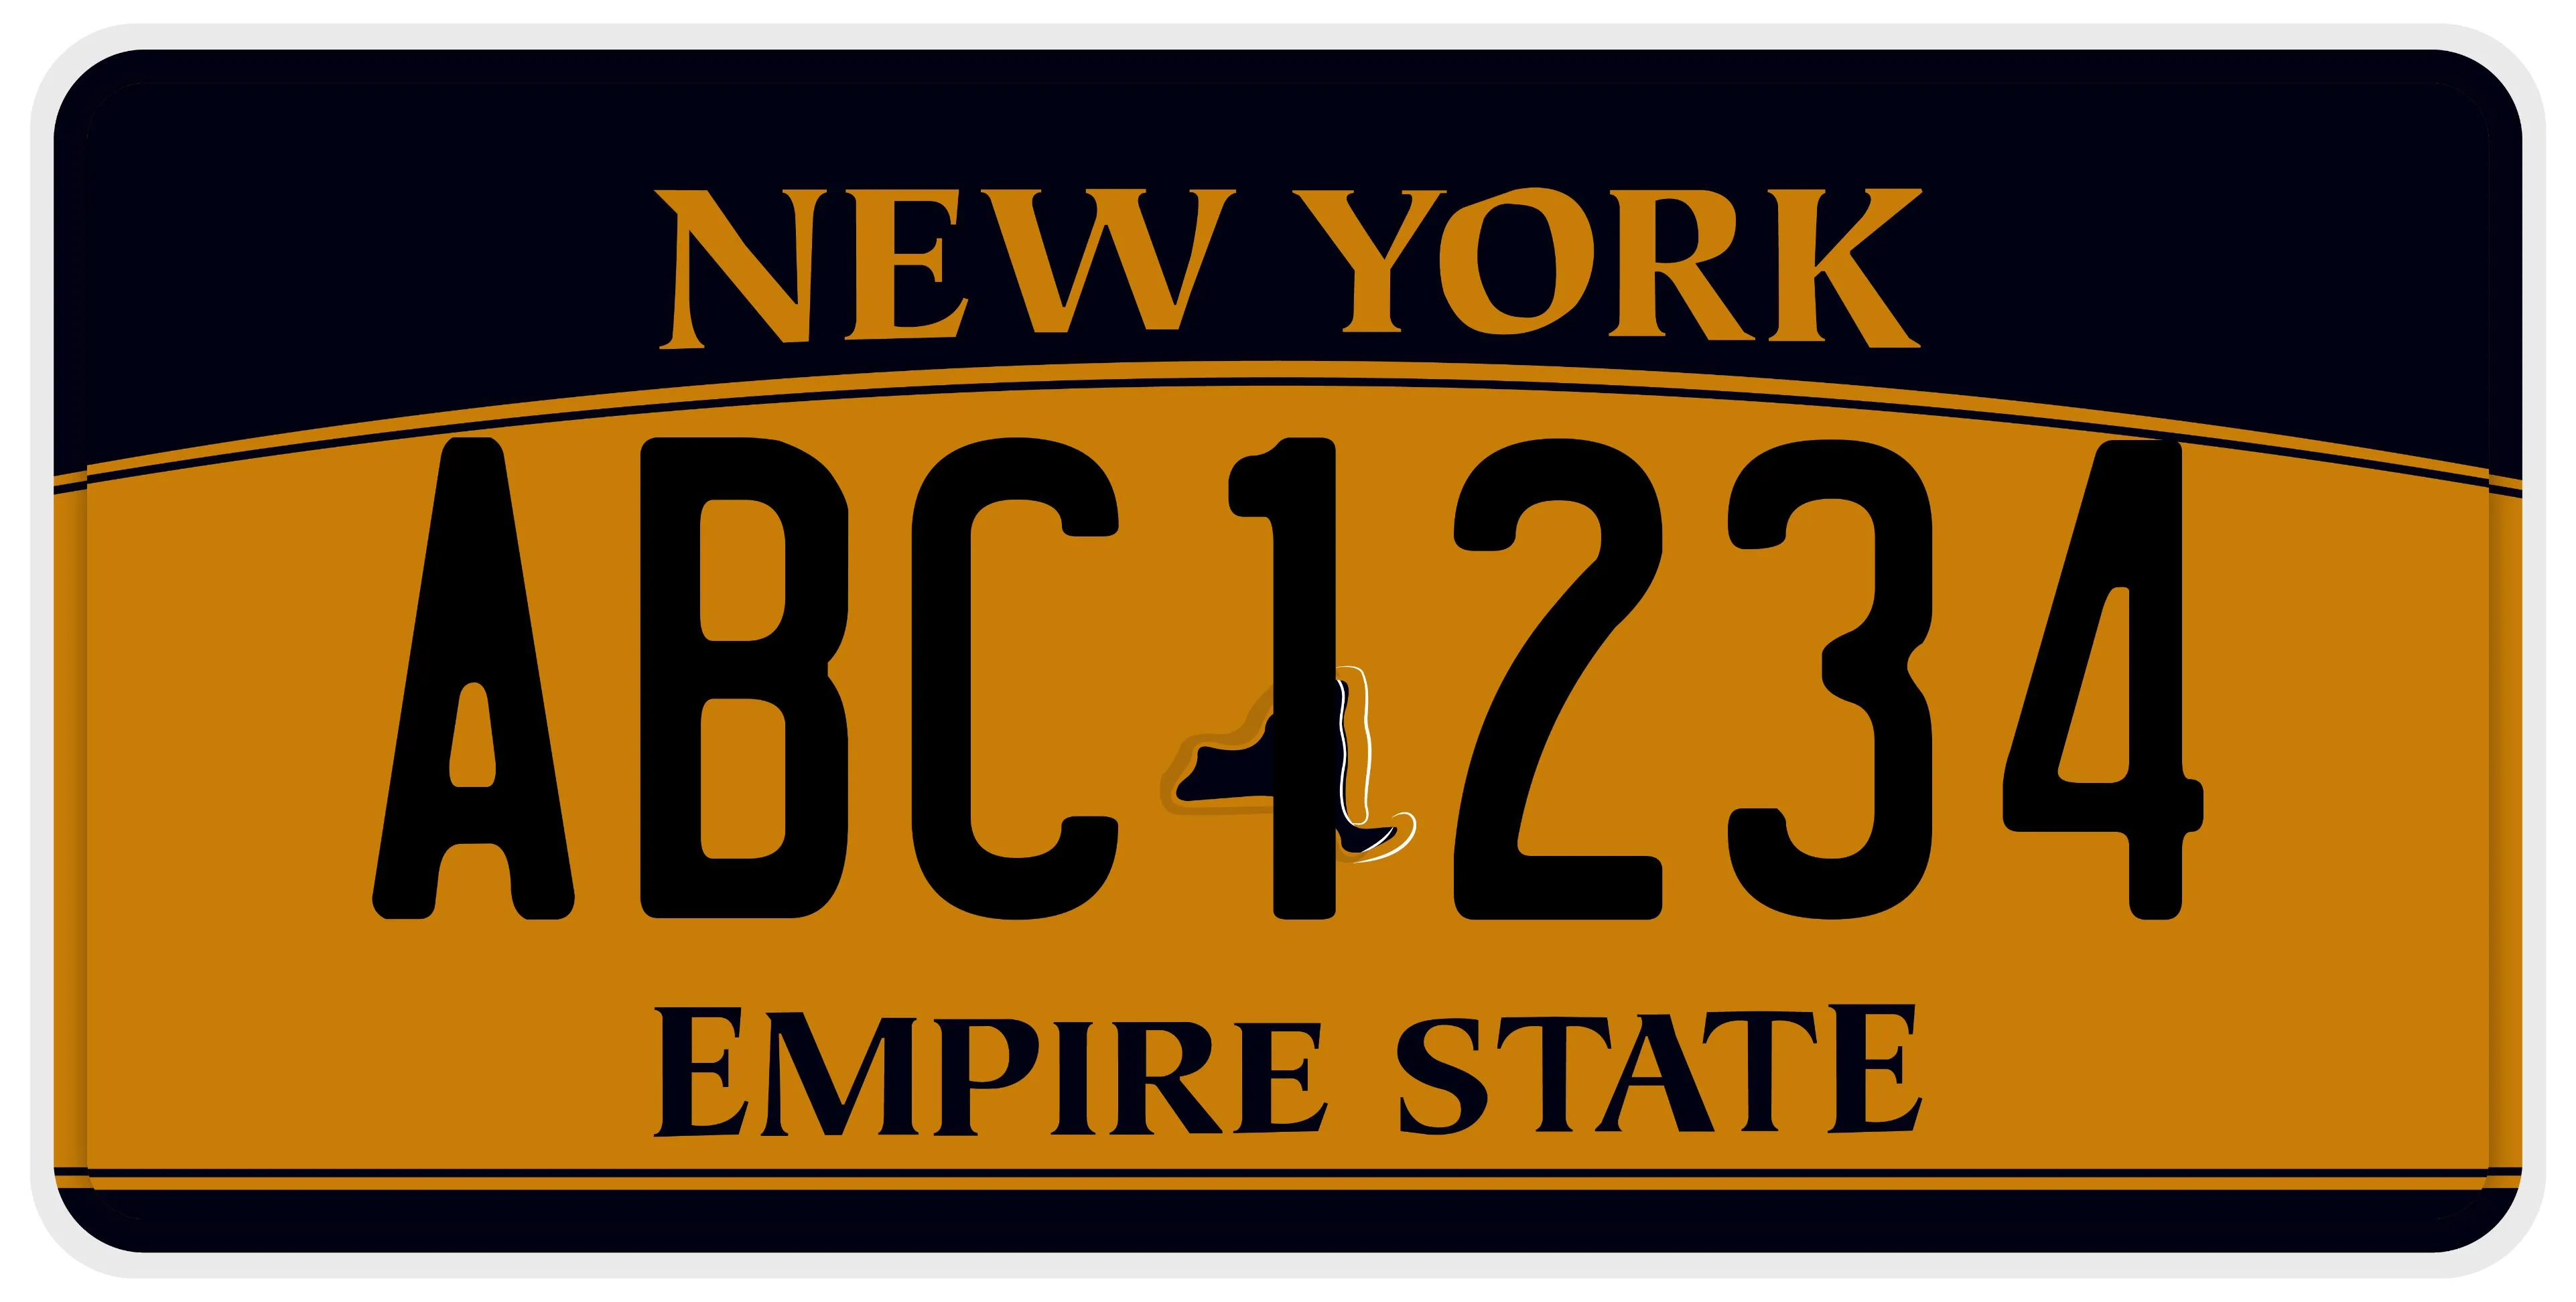 New York License Plate Sample